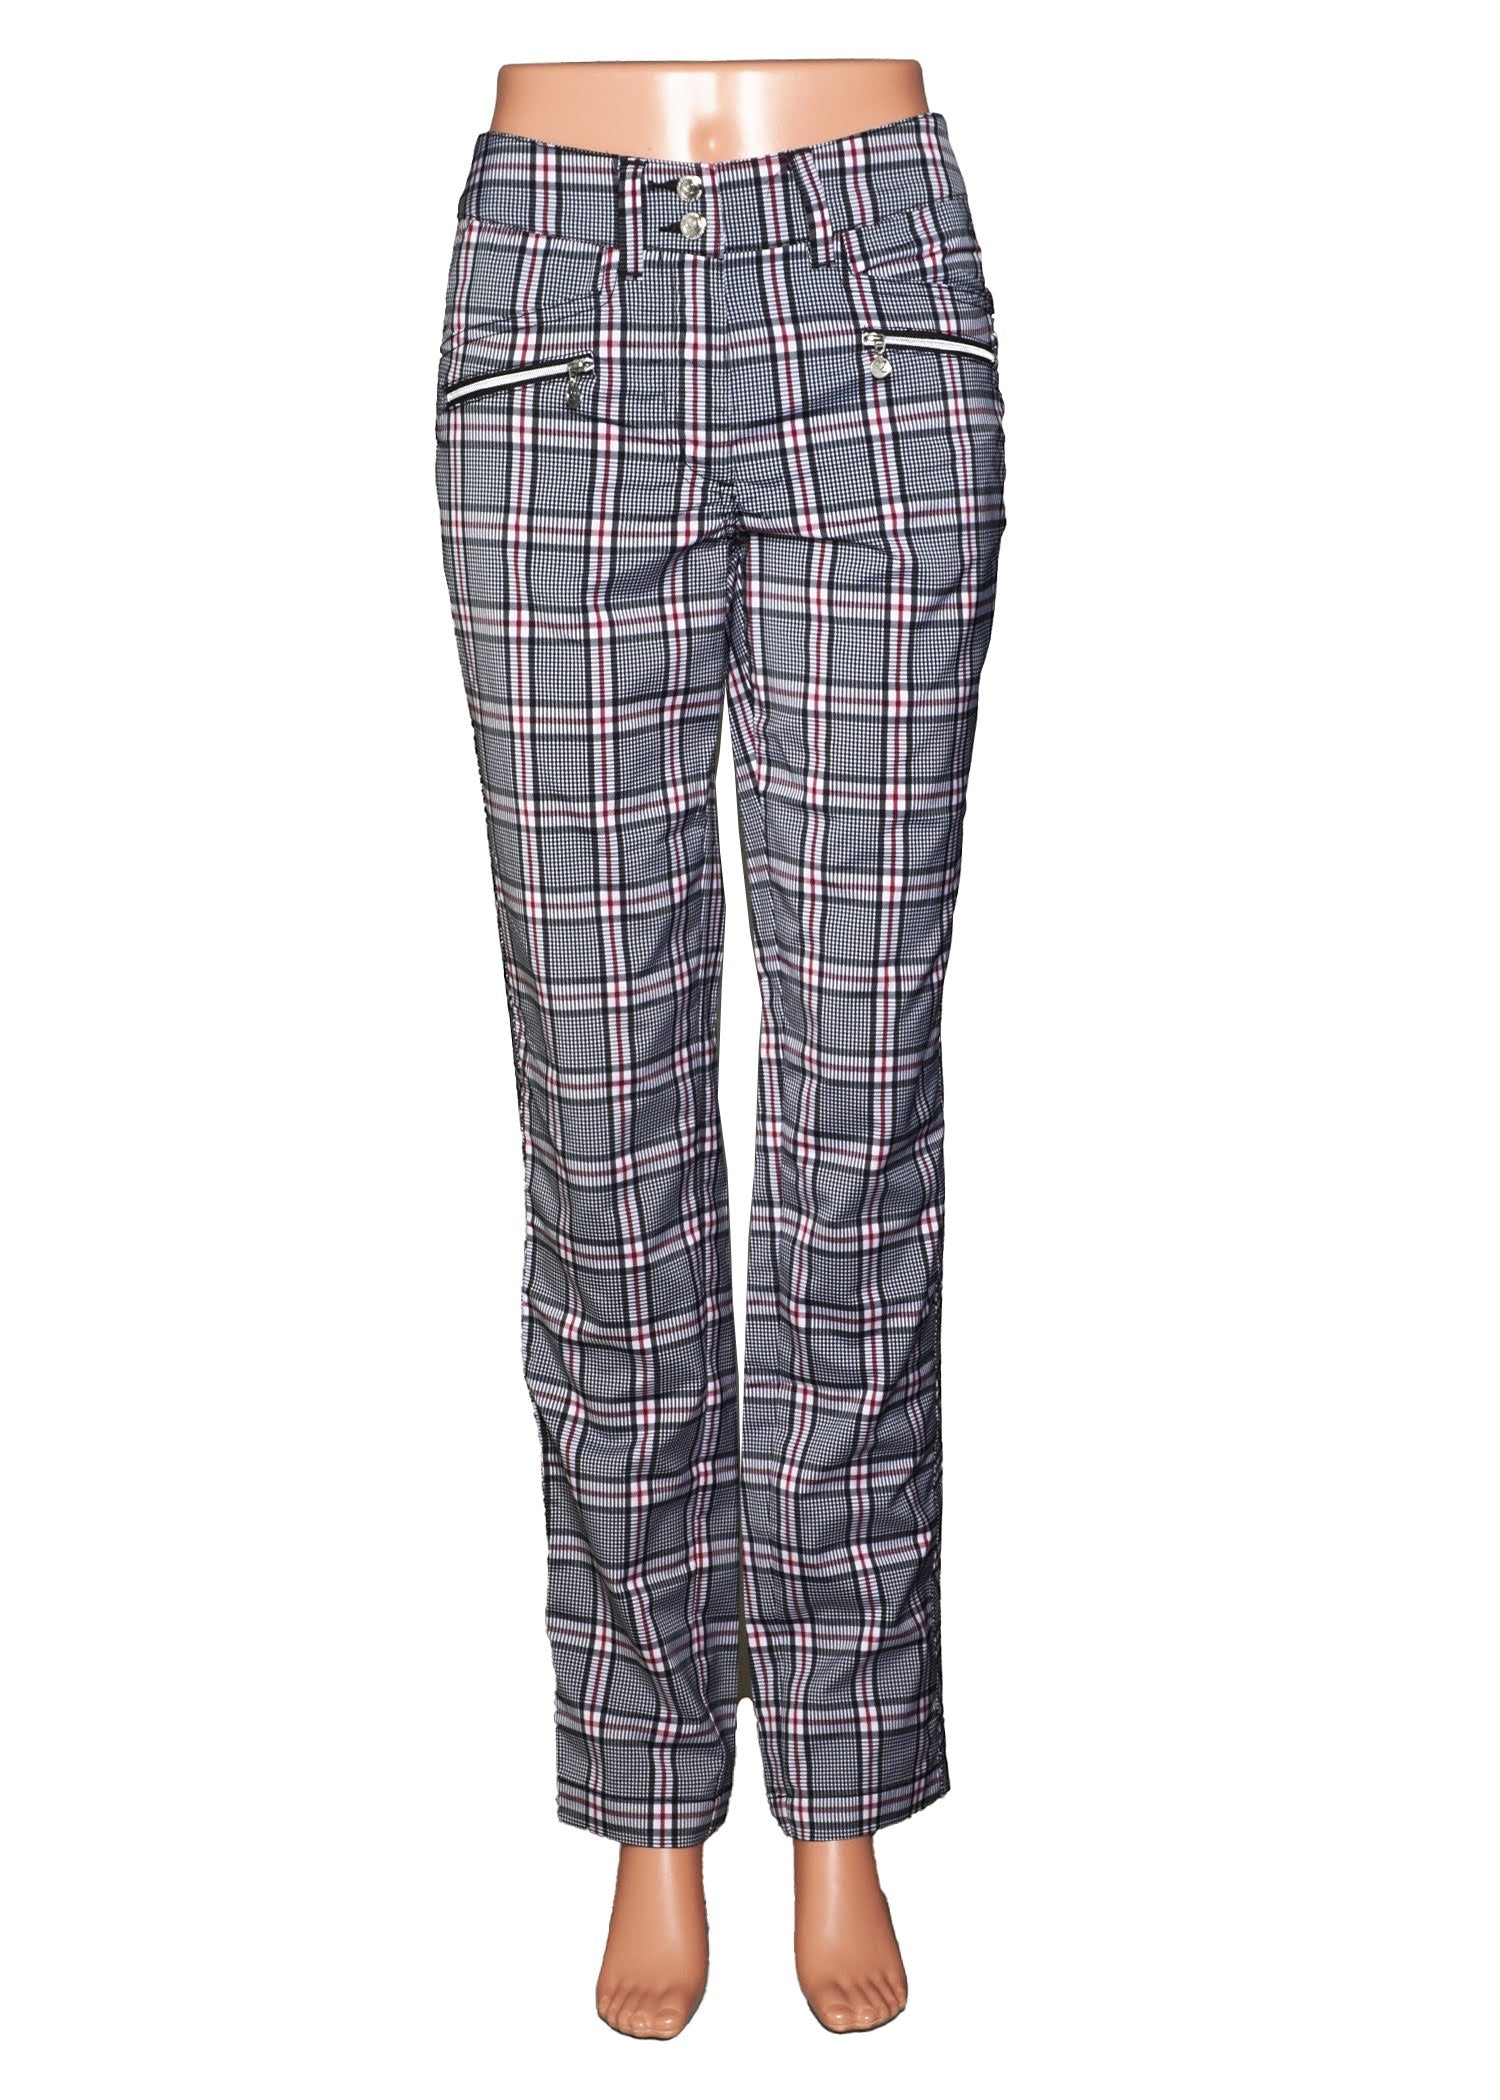 OGLCCG Men's Plaid Dress Pants Casual Slim Fit Stretch Fashion Straight Leg  Pants Skinny Business Golf Suit Pants - Walmart.com